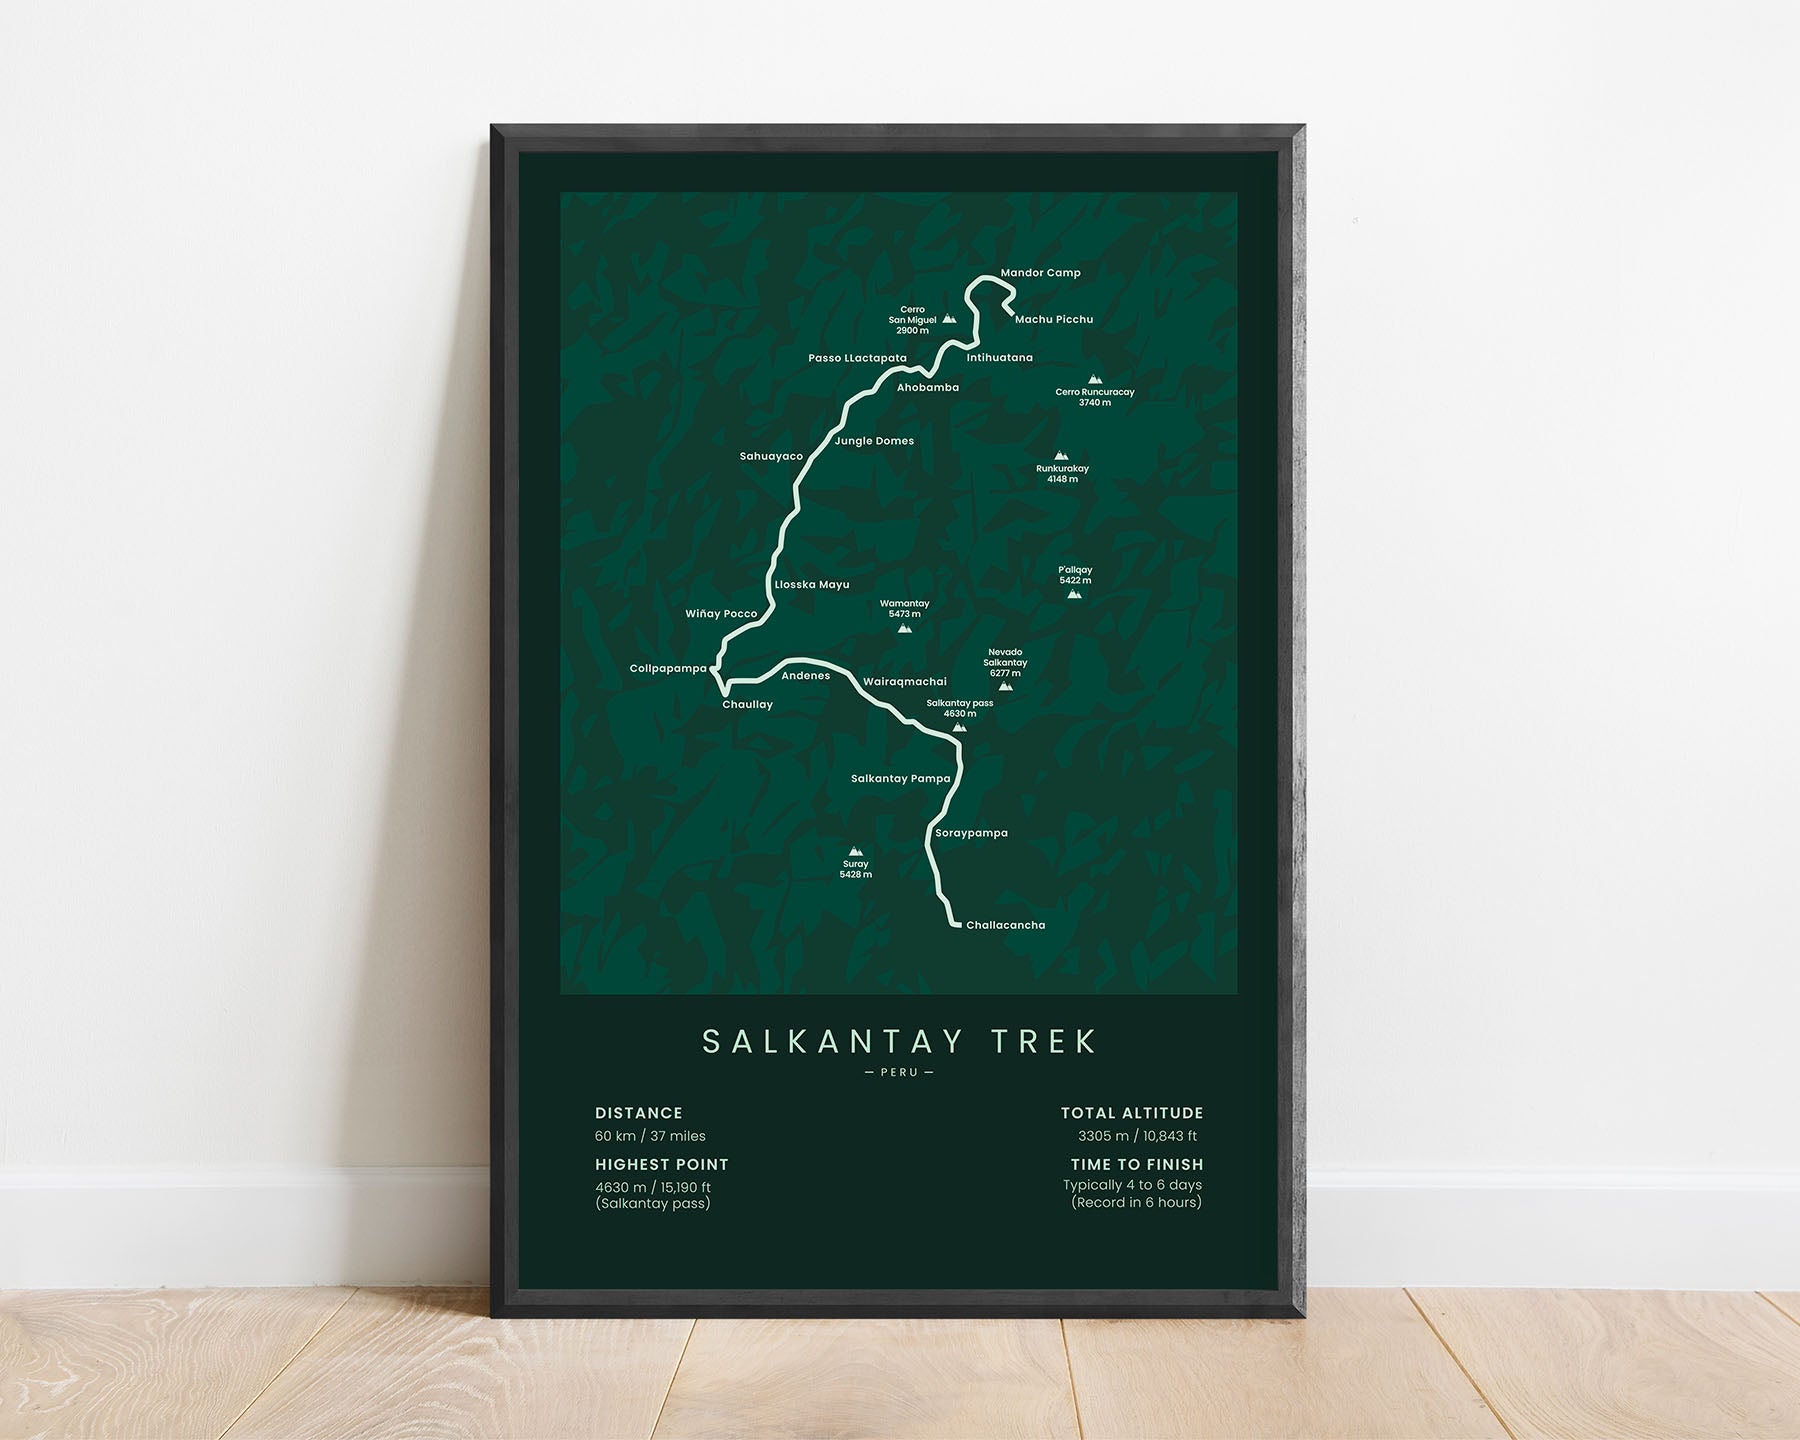 Salkantay Trek (Peru) trek map art with green background